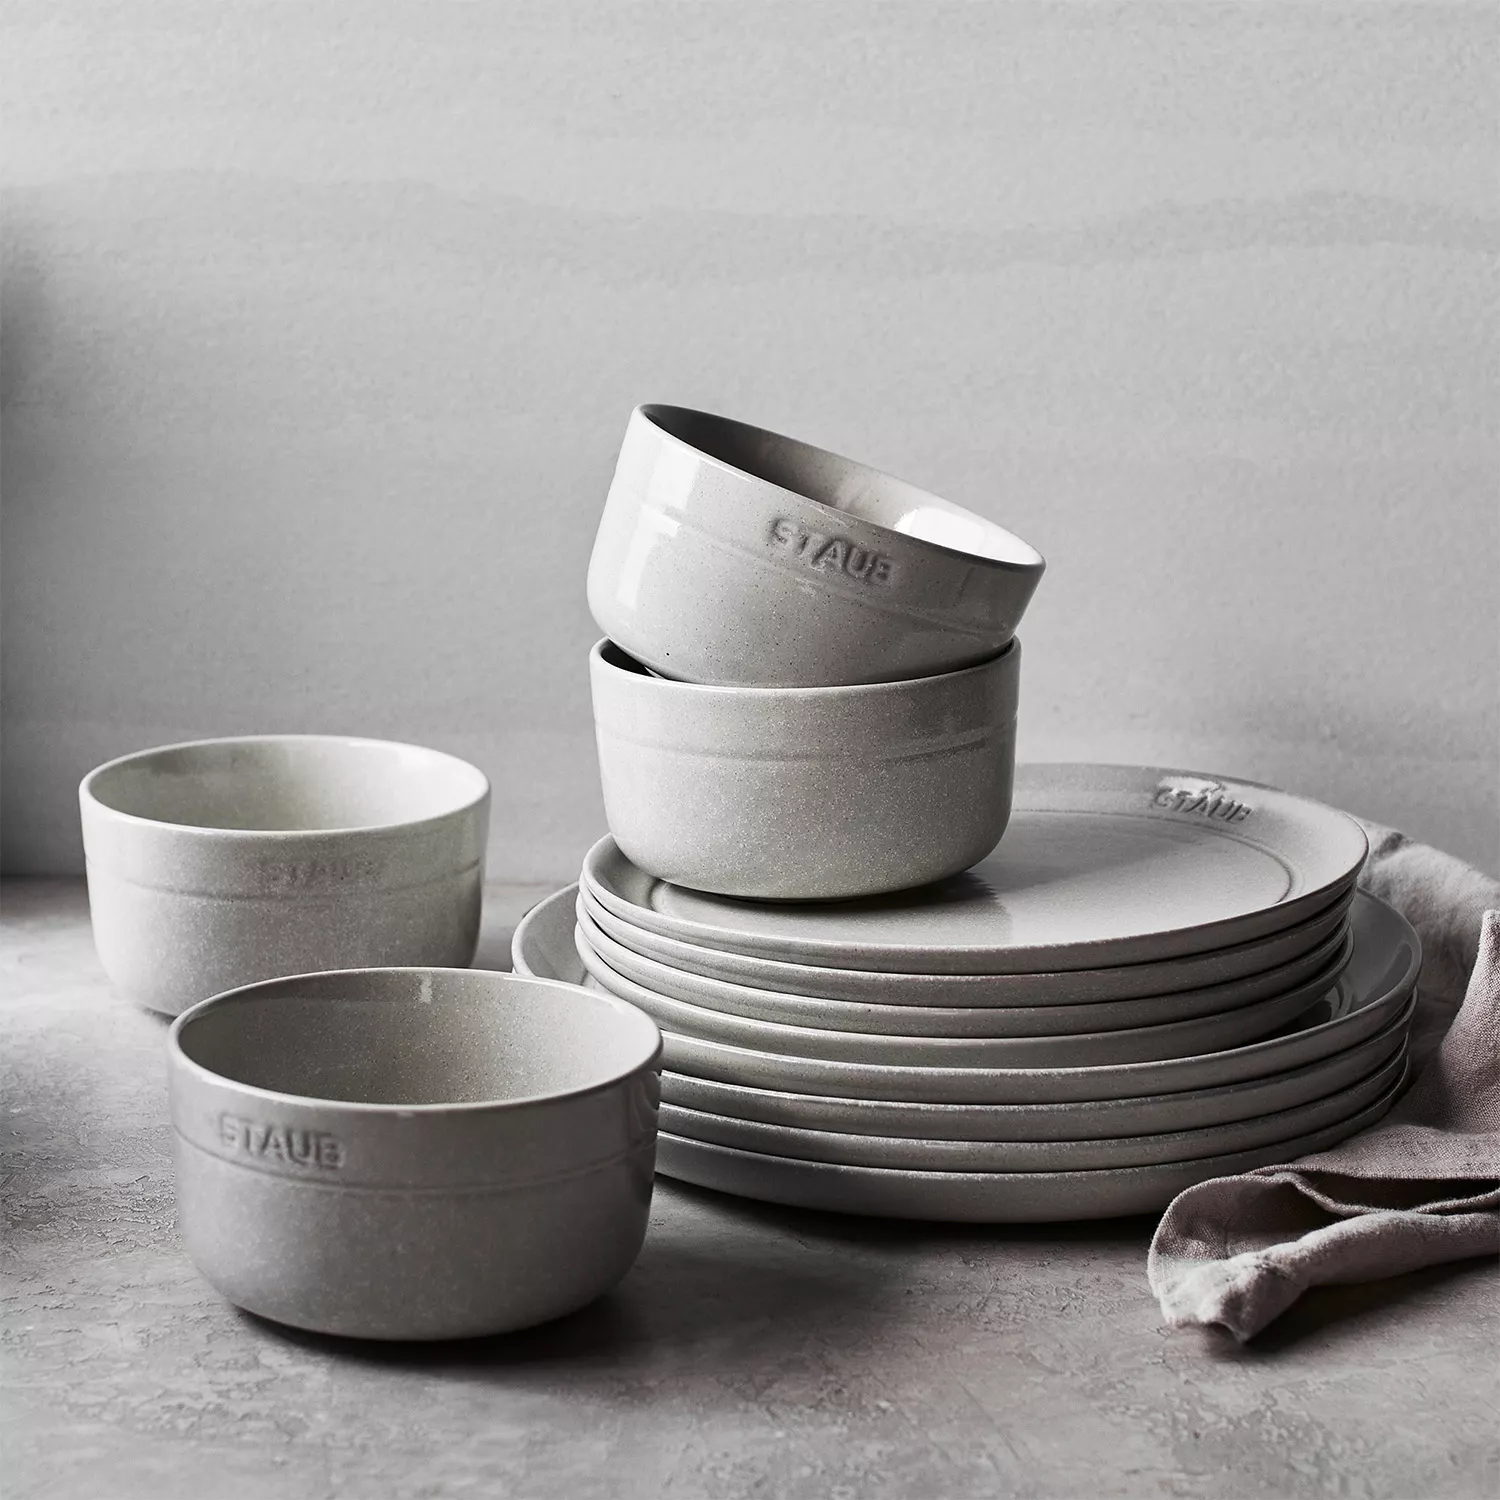 Sur La Table Silicone Baking Cups, Set of 12, Gray